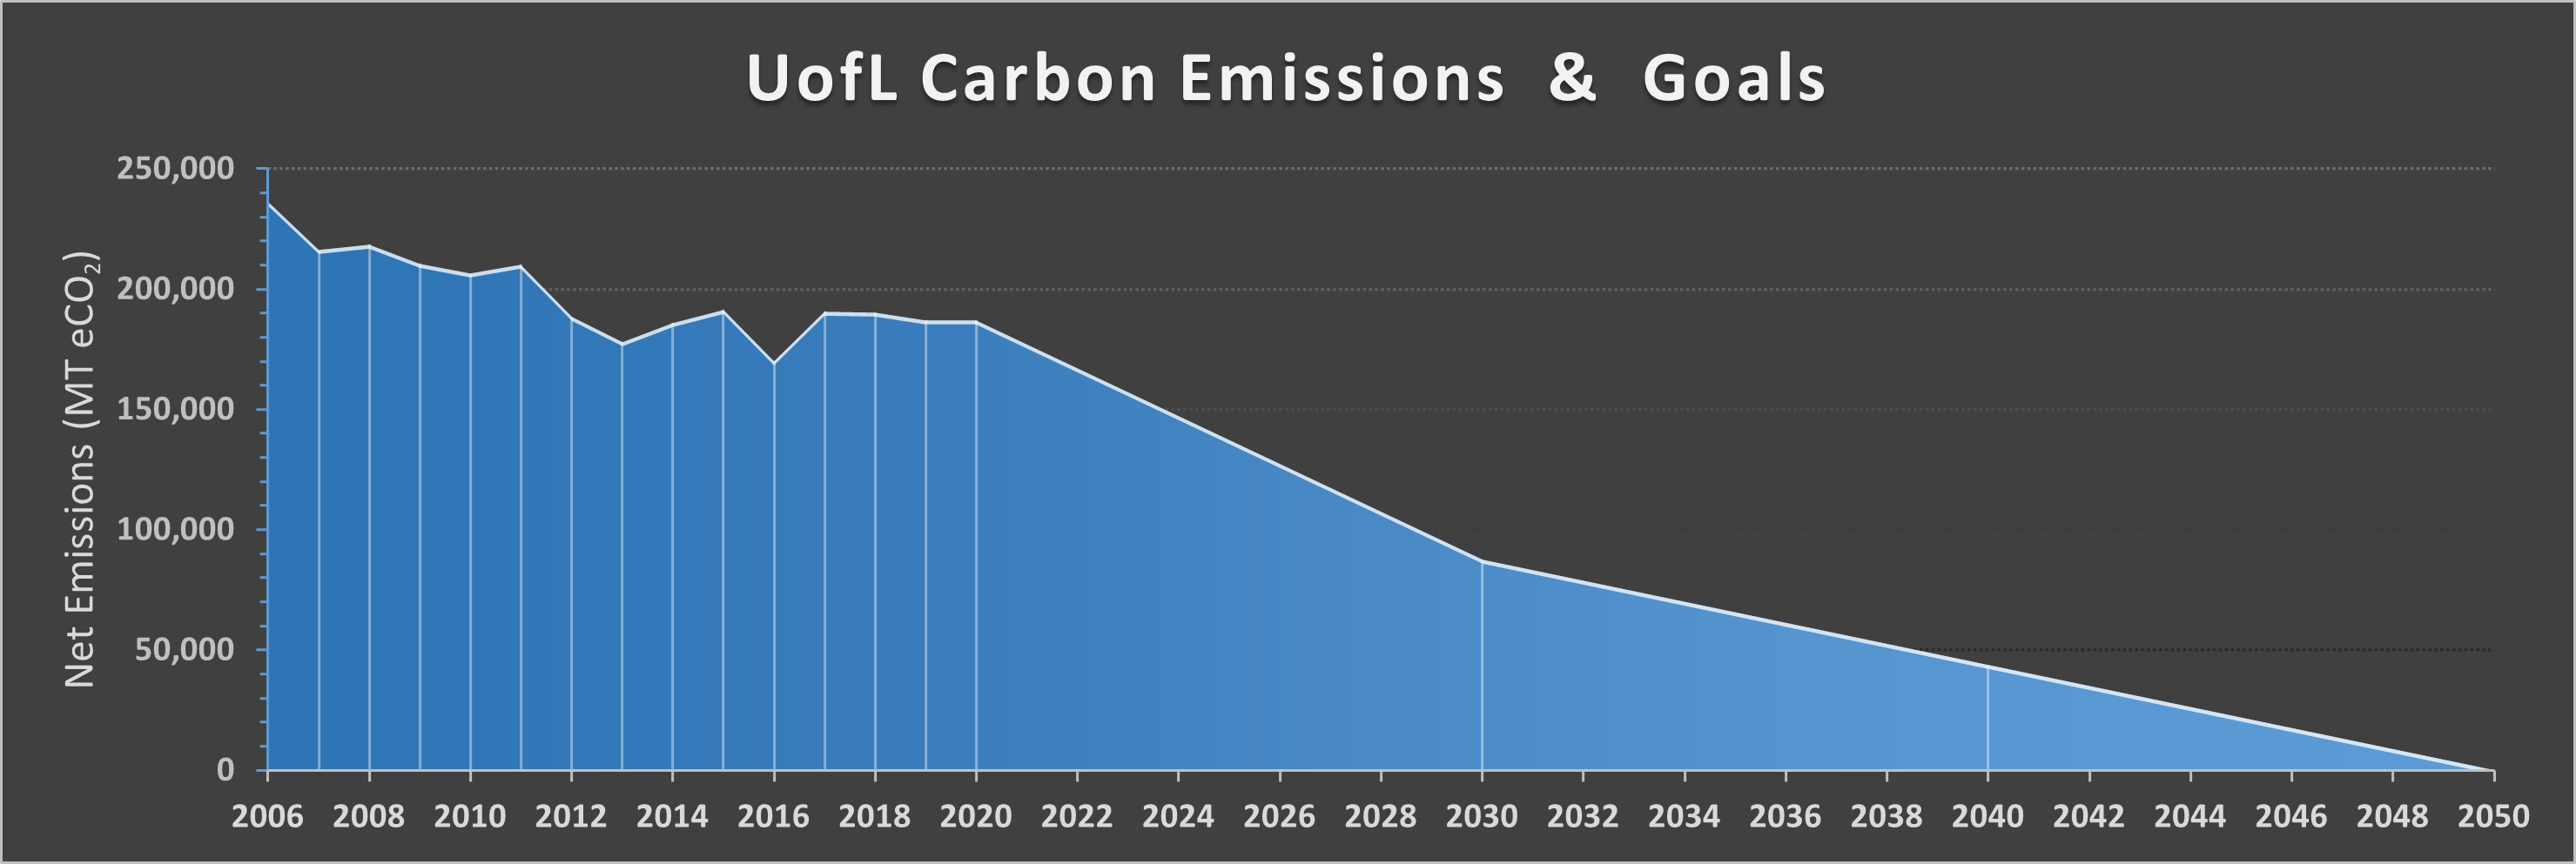 UofL Carbon Emissions + Goals Chart